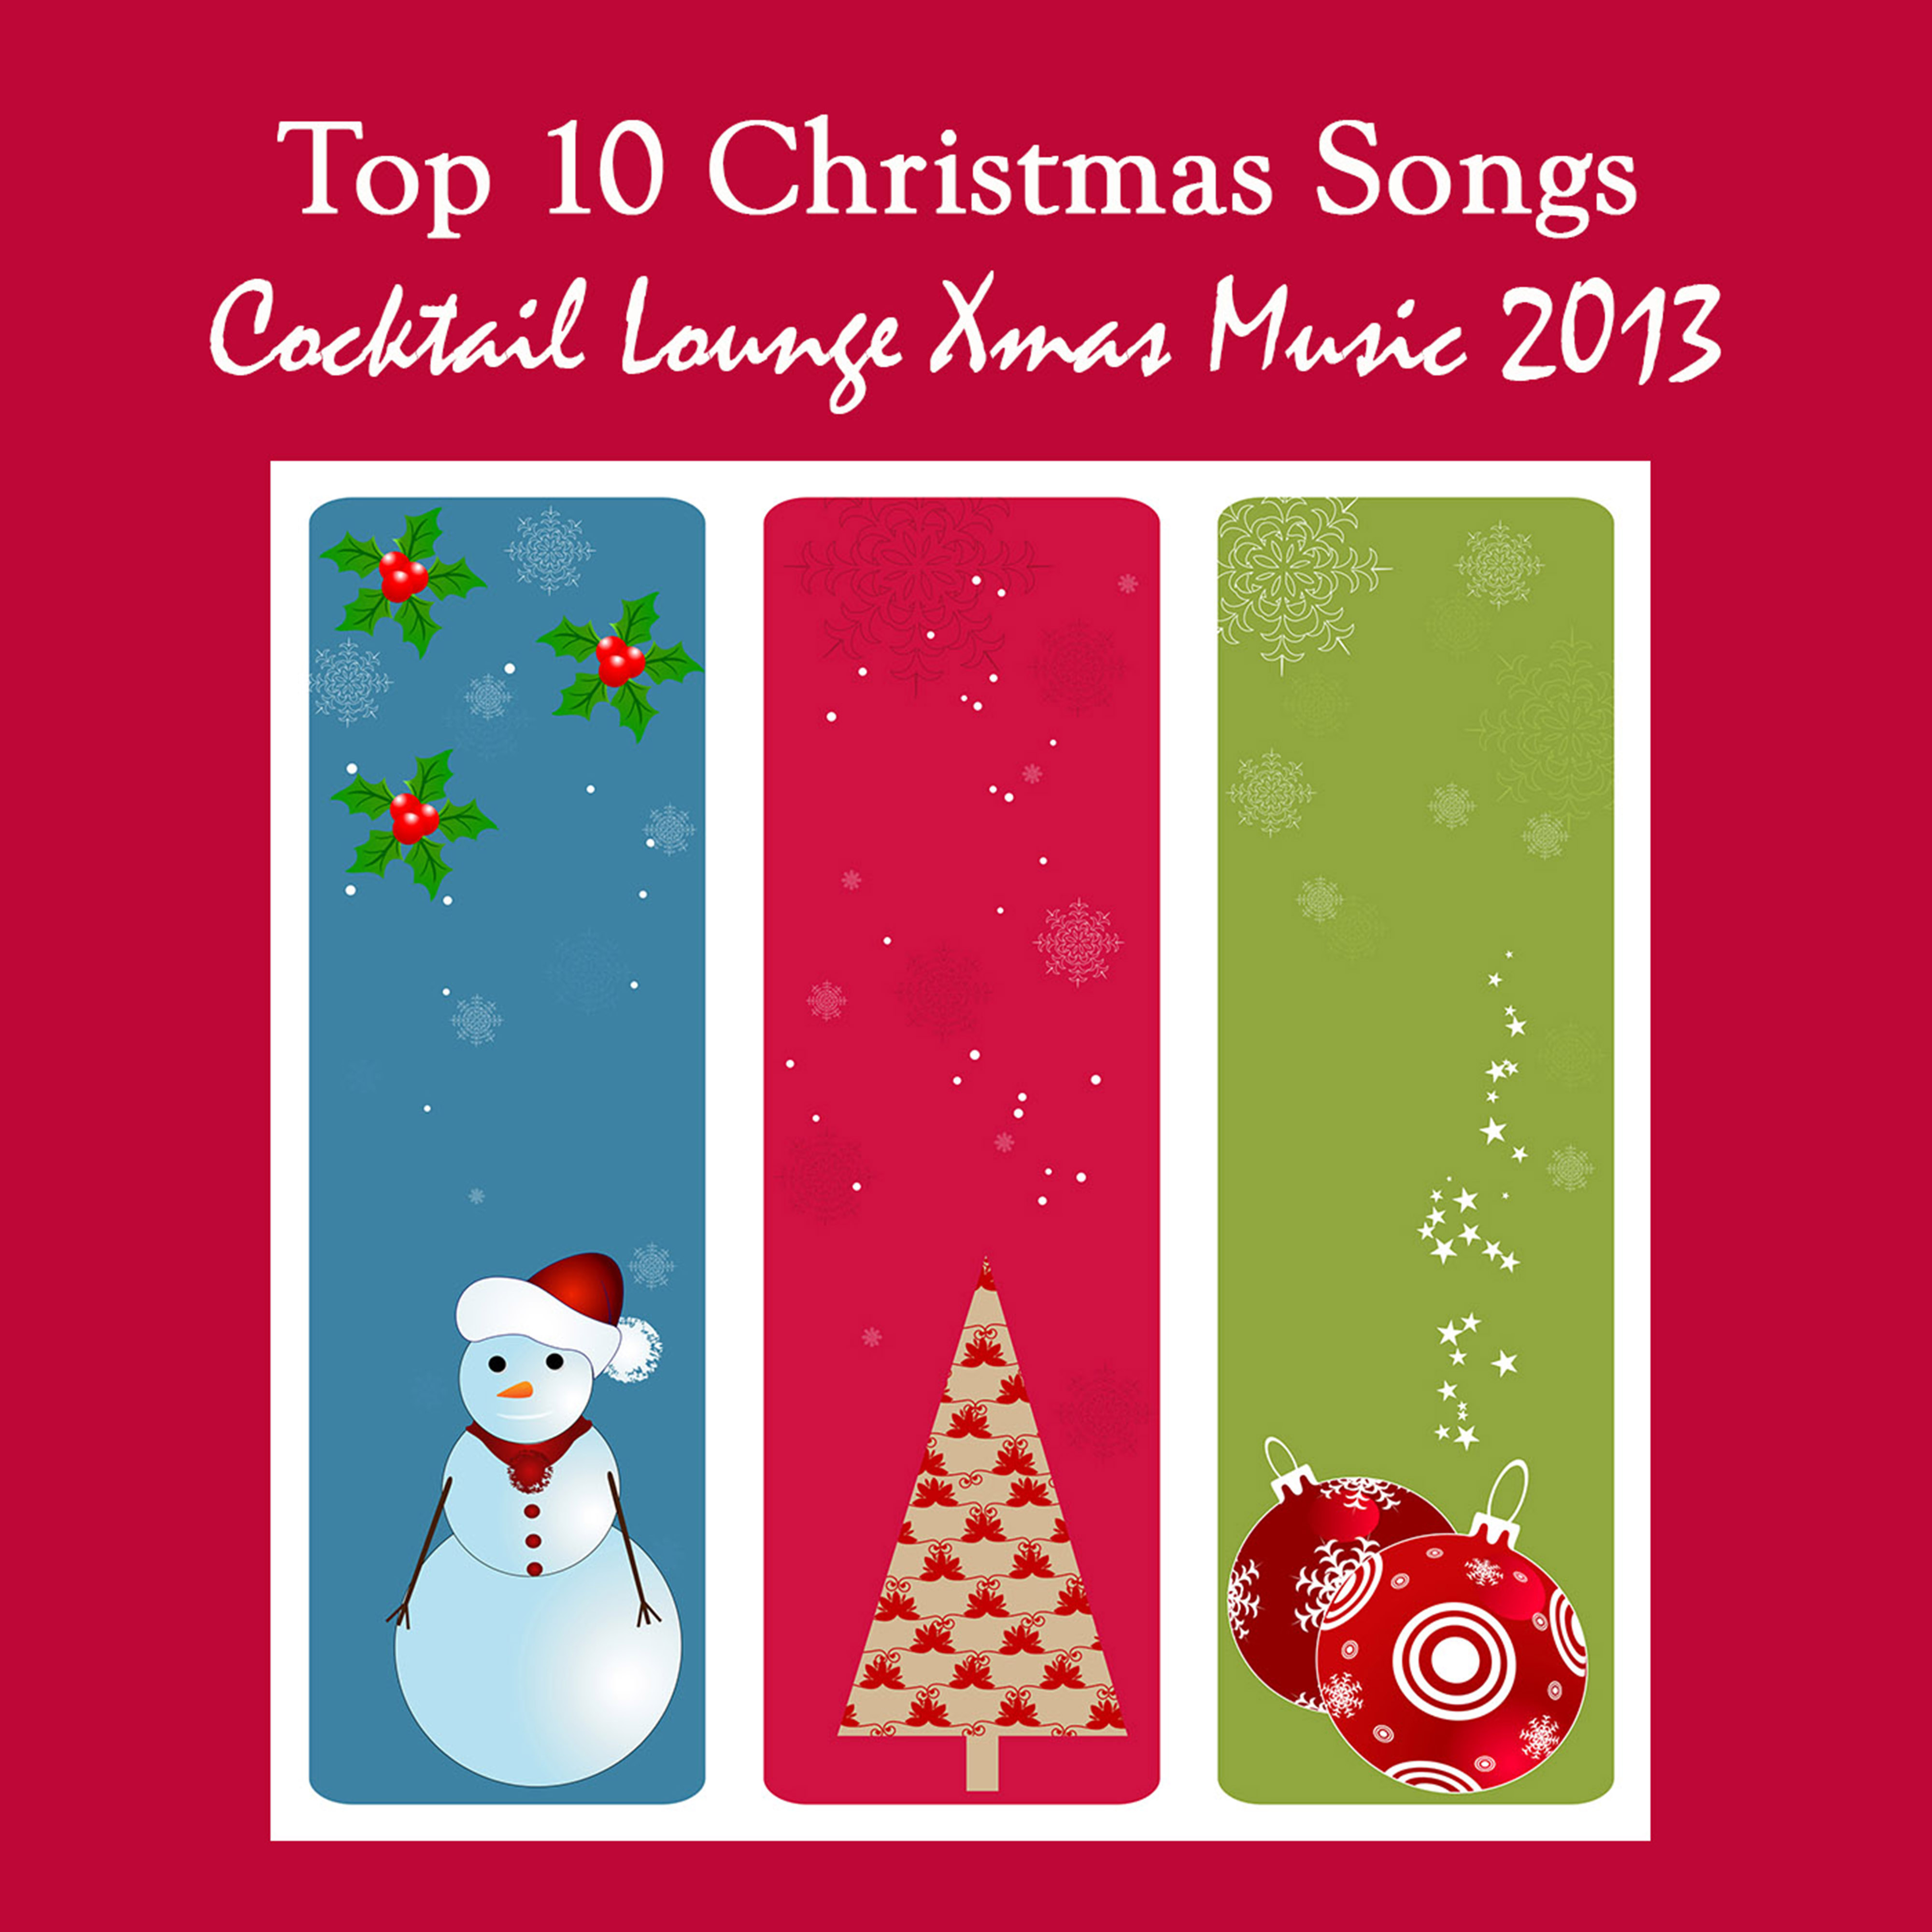 Top 10 Christmas Songs - Cocktail Lounge Xmas Music 2013